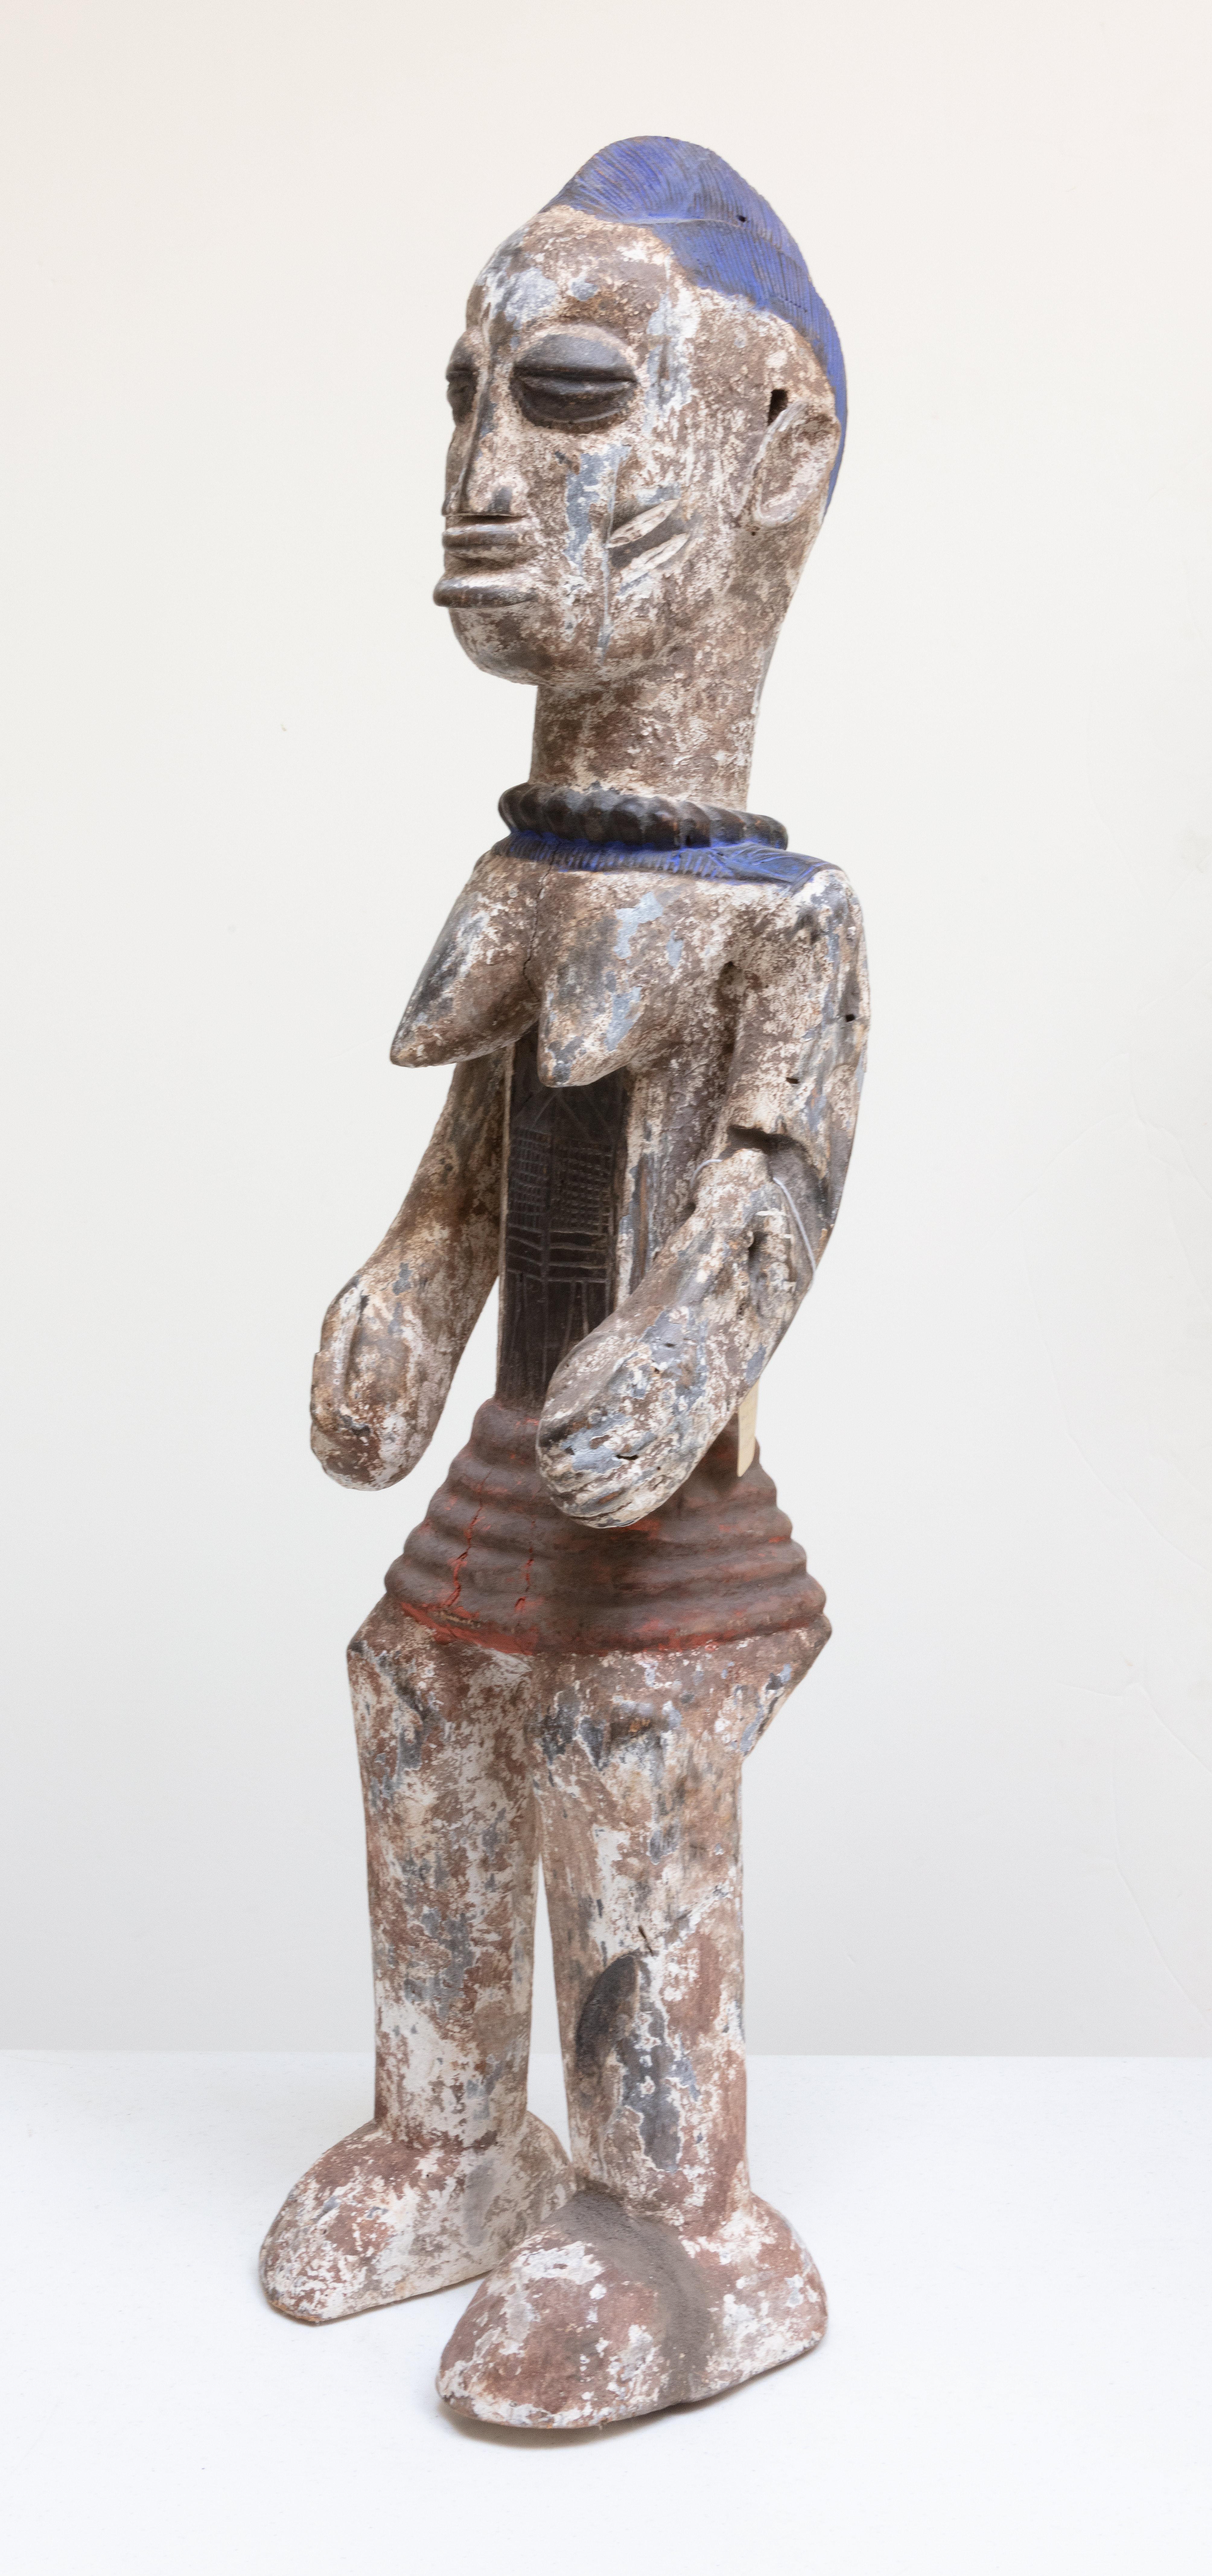 Unknown Figurative Sculpture - "Idgo Nigeria Female Standing, " Wood Statue with Blue & White Pigment circa 1930